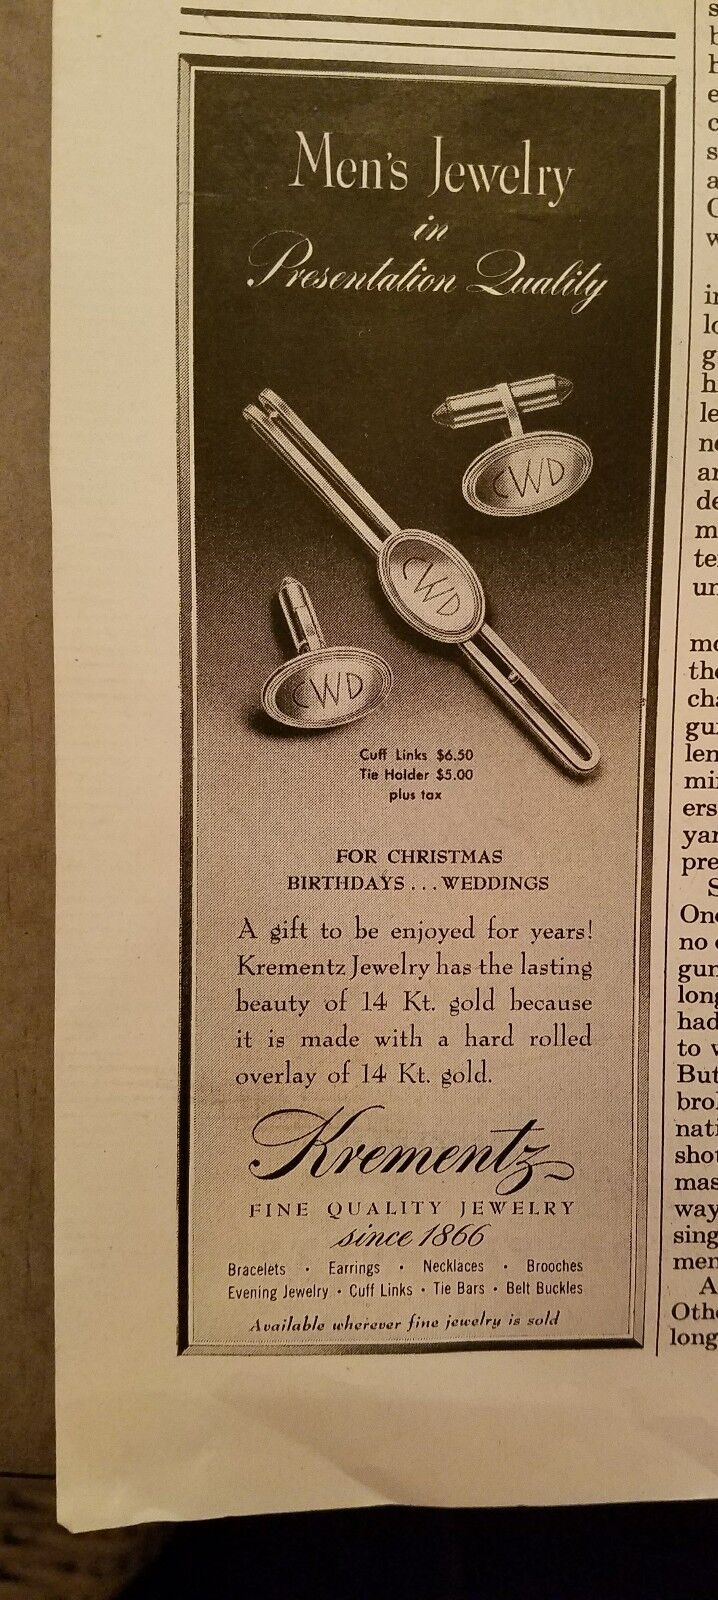 1950 Krementz cufflinks tie holder for Christmas men\'s jewelry cuff links ad